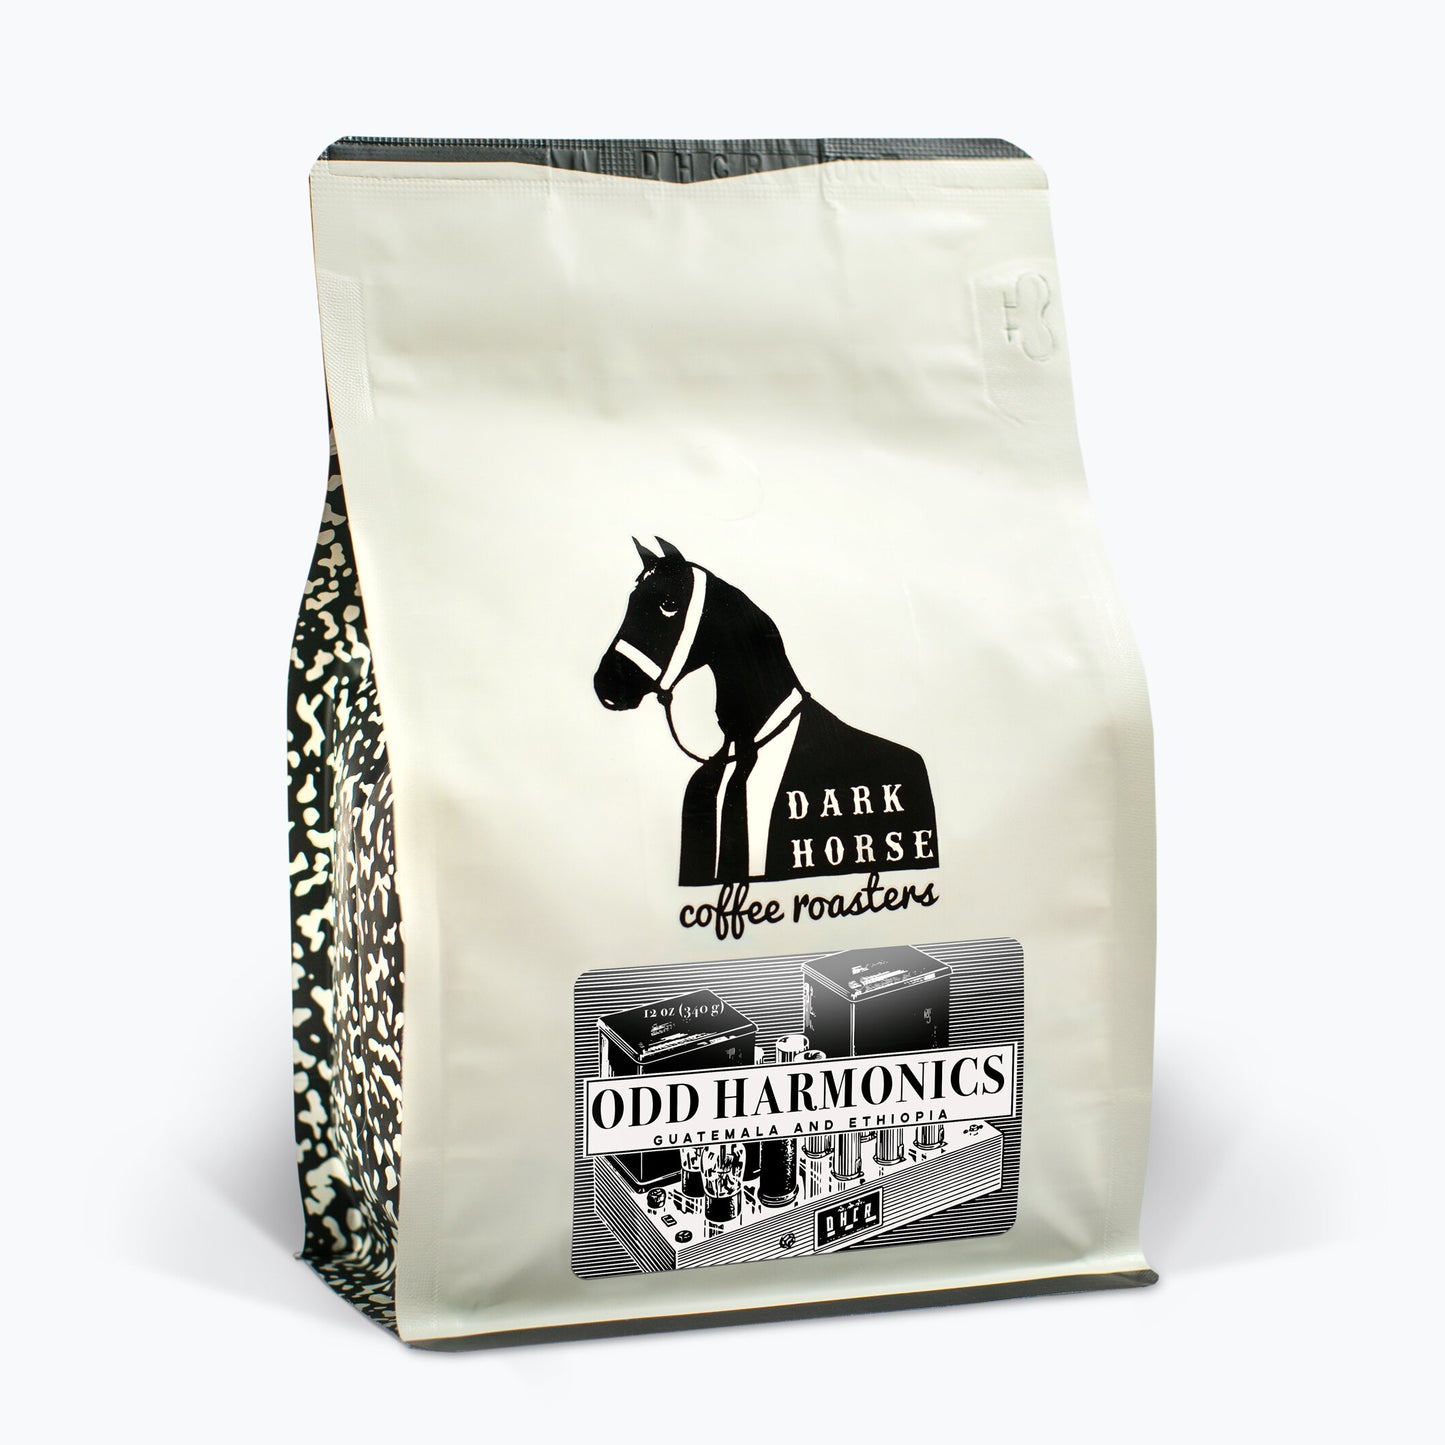 Odd Harmonics Coffee blend from Dark Horse Coffee Roasters